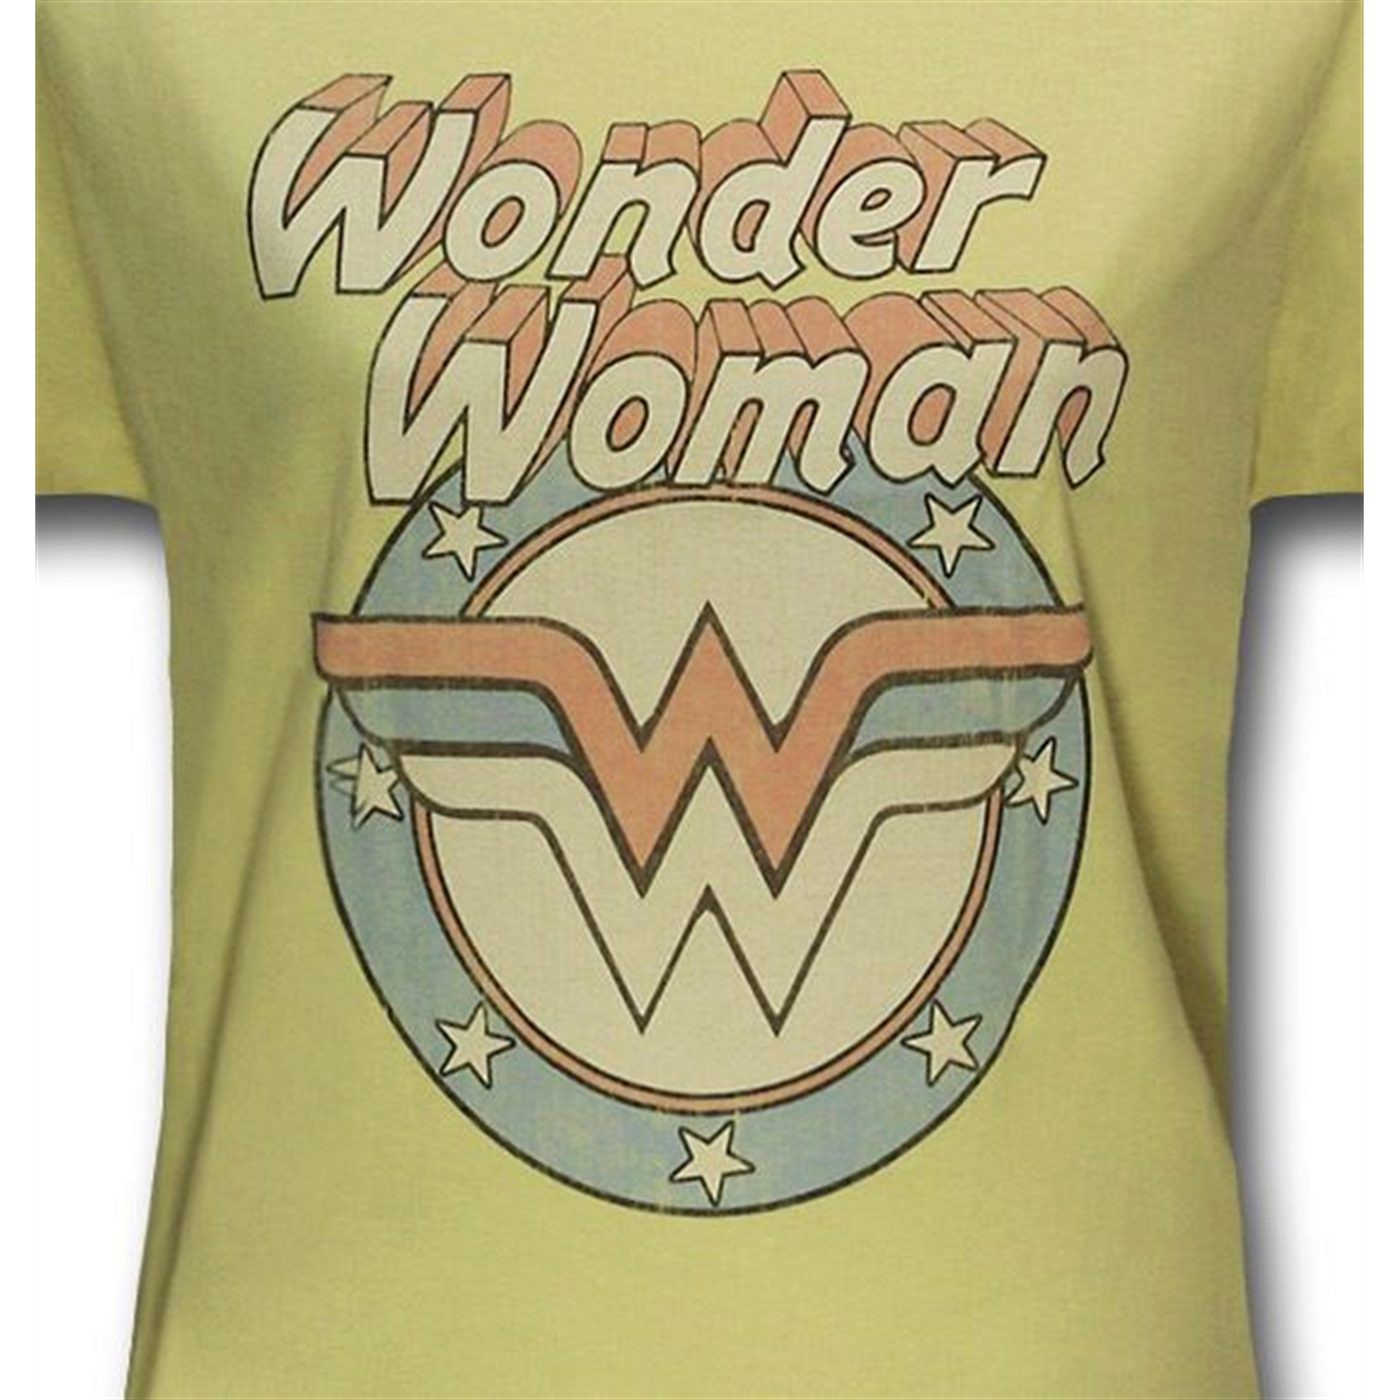 Wonder Woman Vintage Logo Yellow Women's T-Shirt